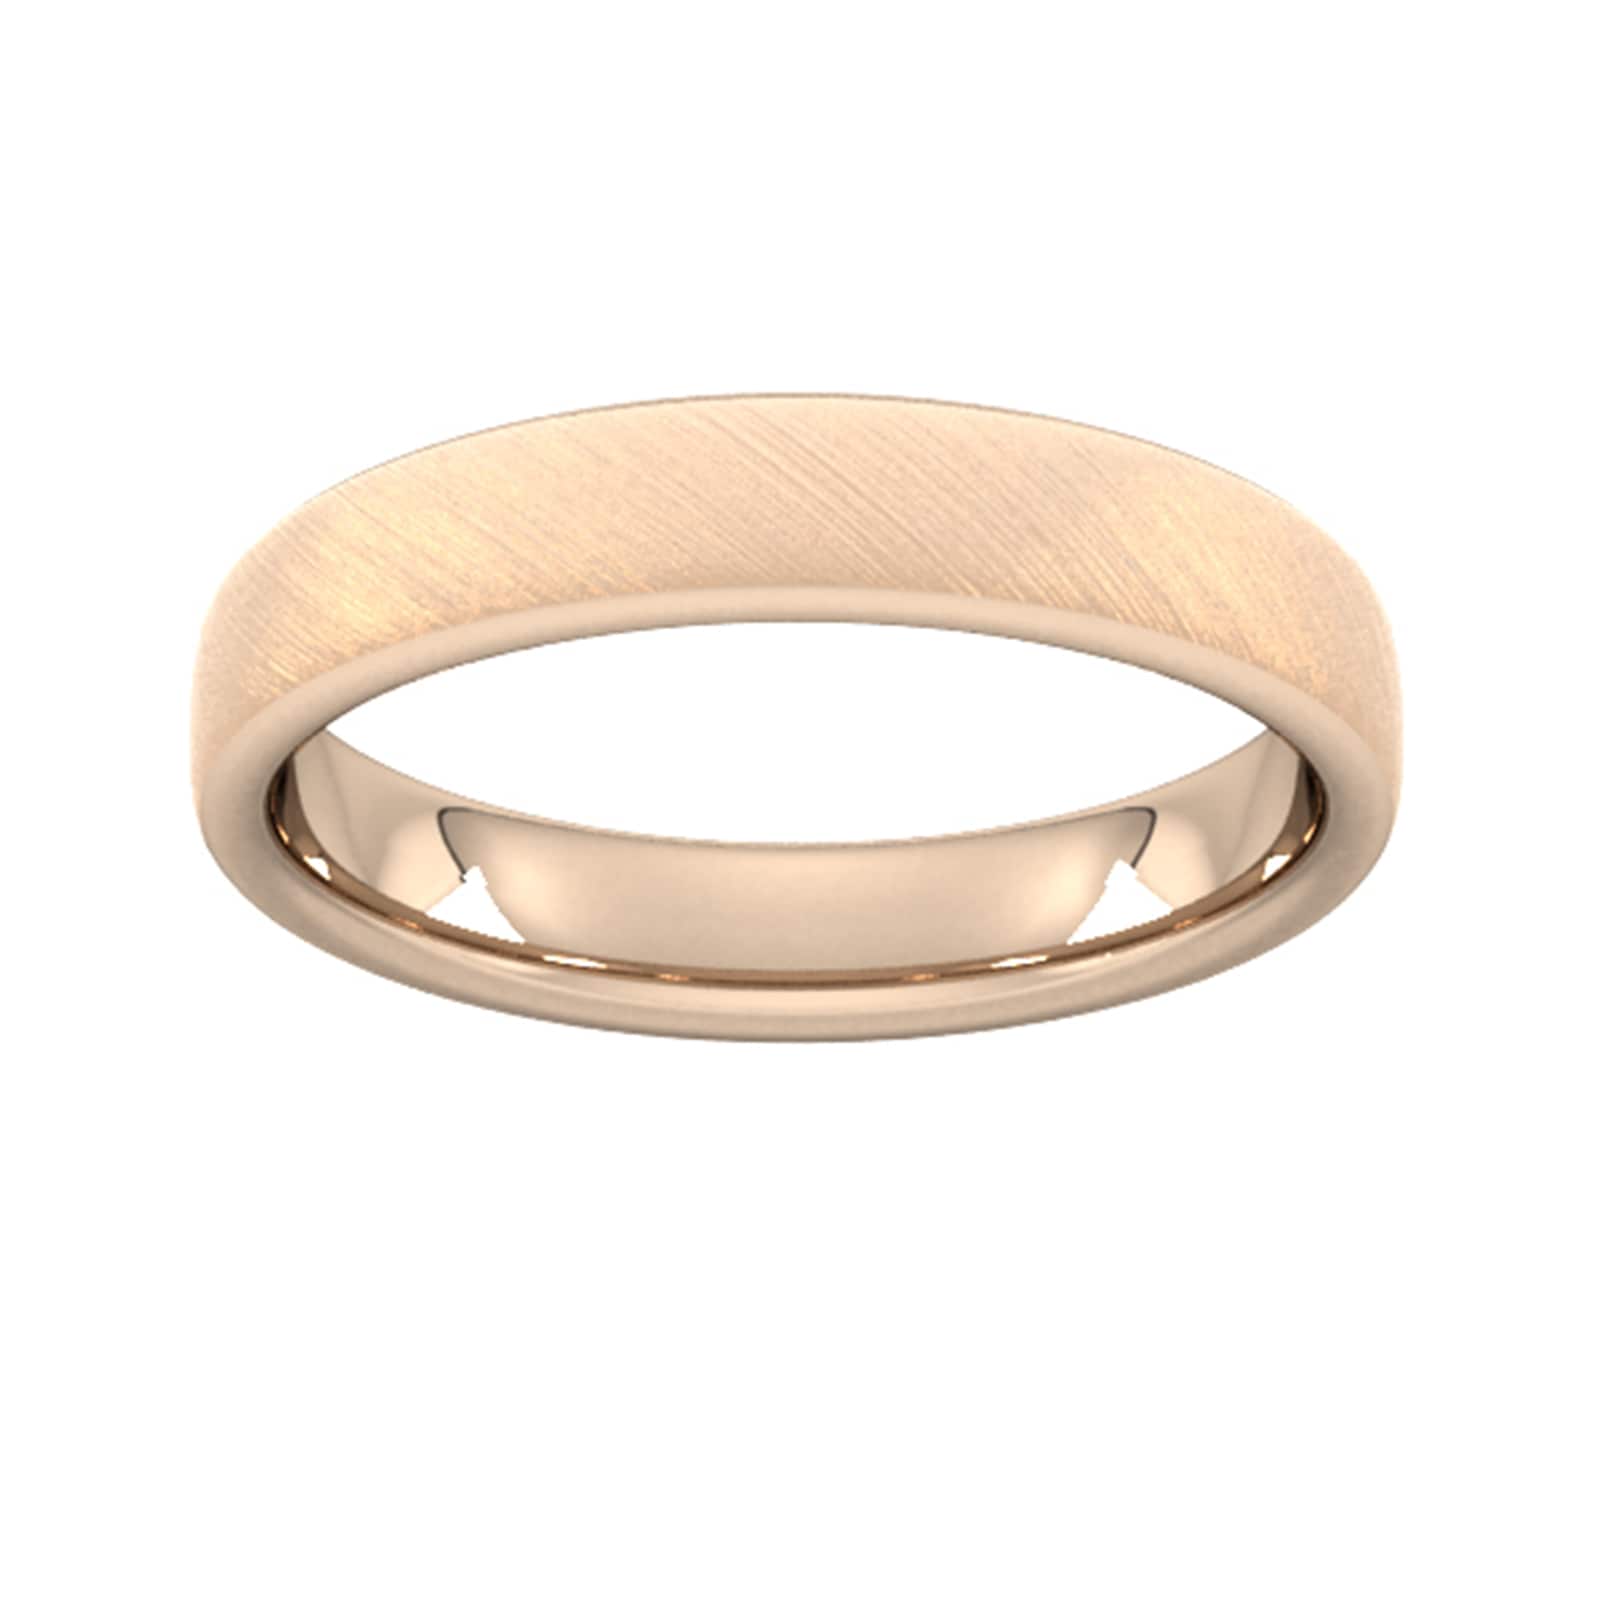 4mm Slight Court Standard Diagonal Matt Finish Wedding Ring In 18 Carat Rose Gold - Ring Size O